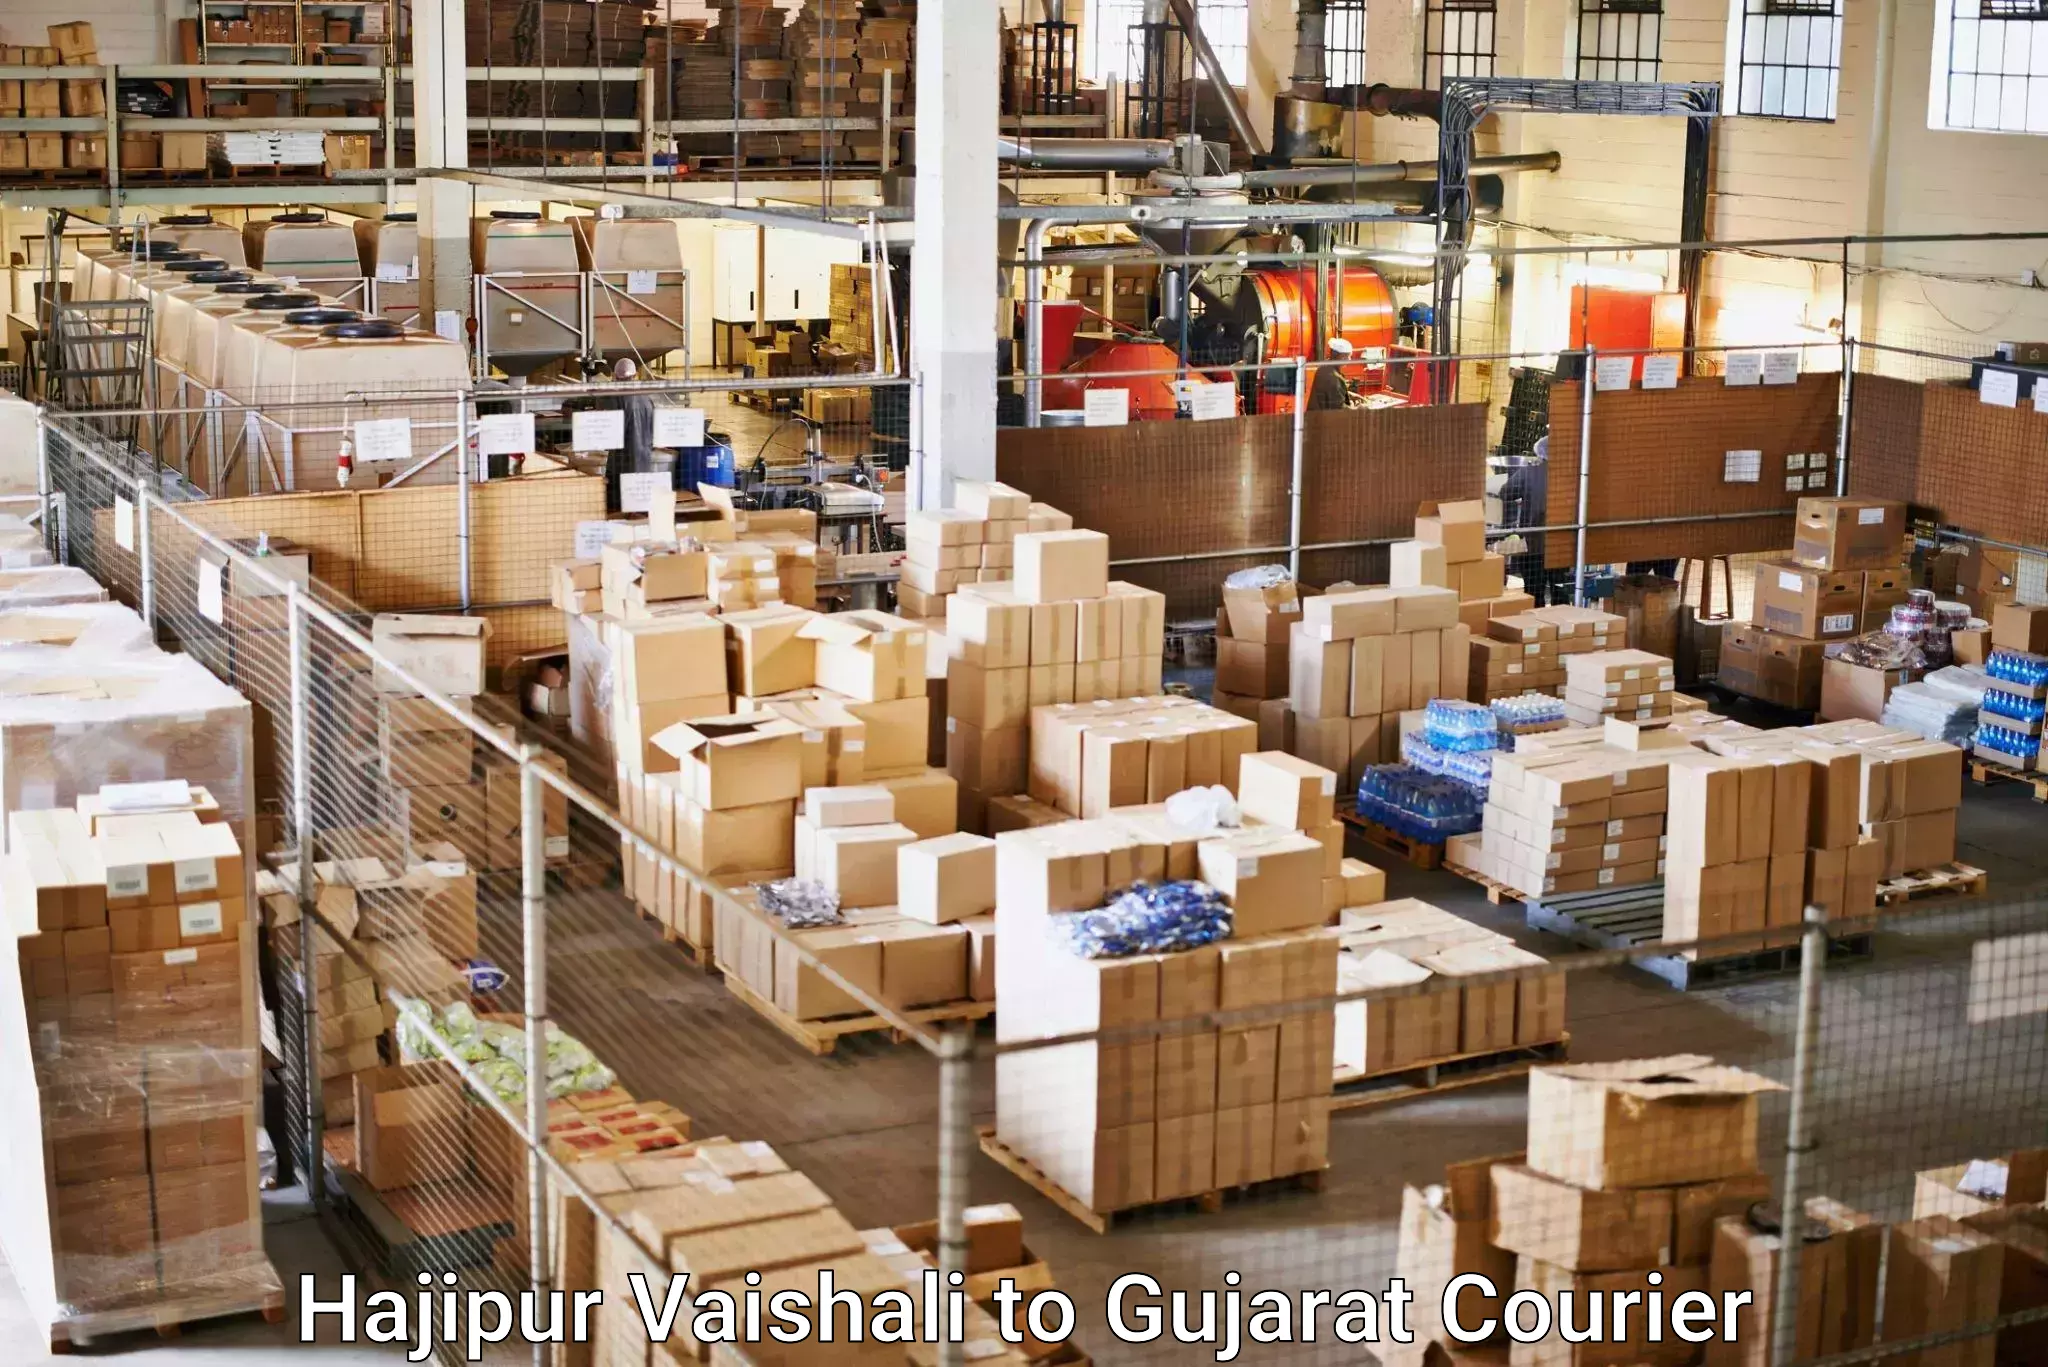 Courier service comparison Hajipur Vaishali to Gujarat